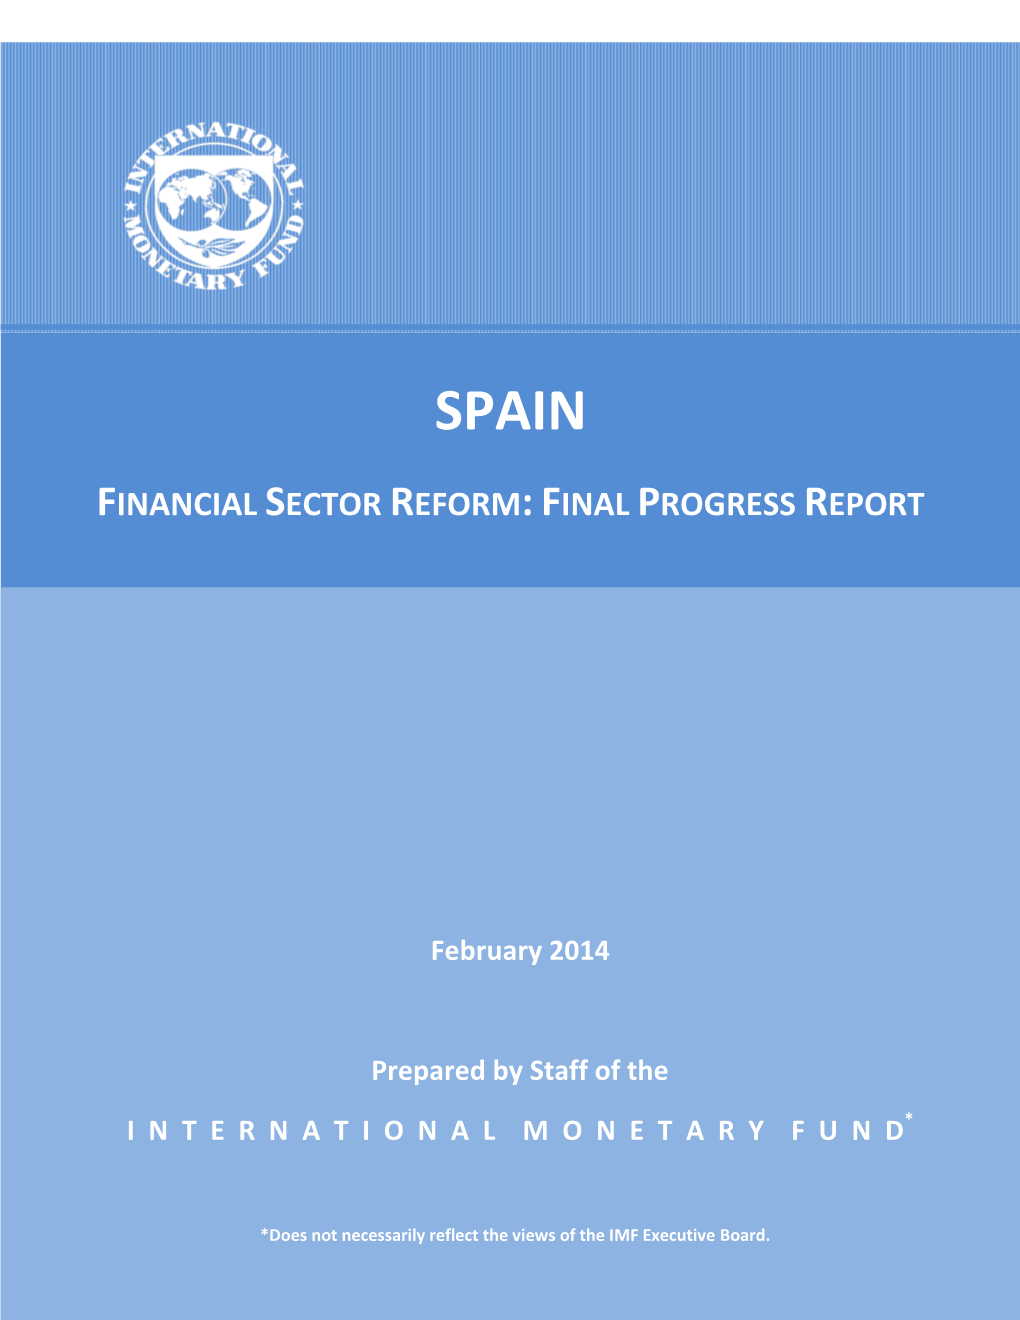 Spain. Financial Sector Reform: Final Progress Report